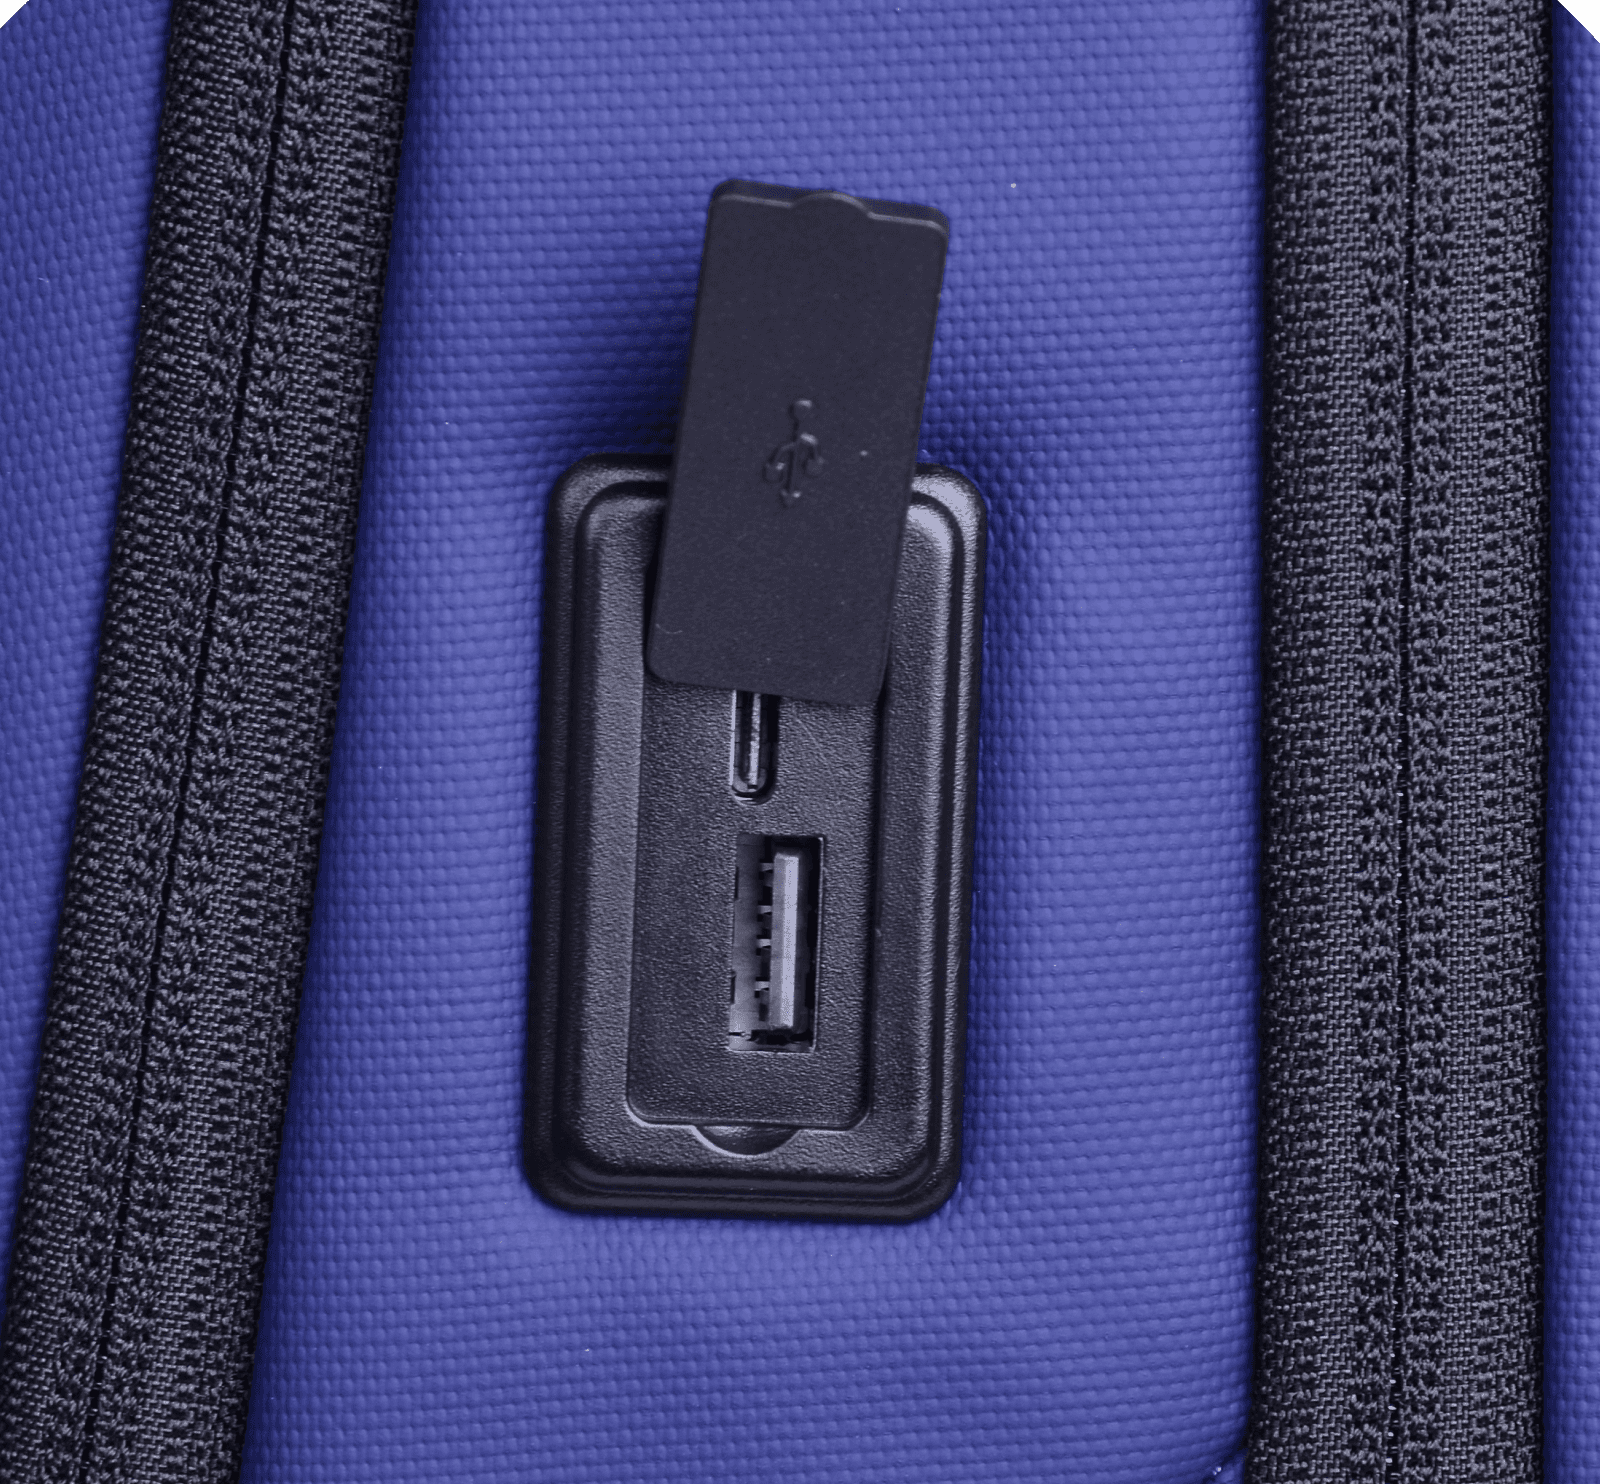 USB backpack